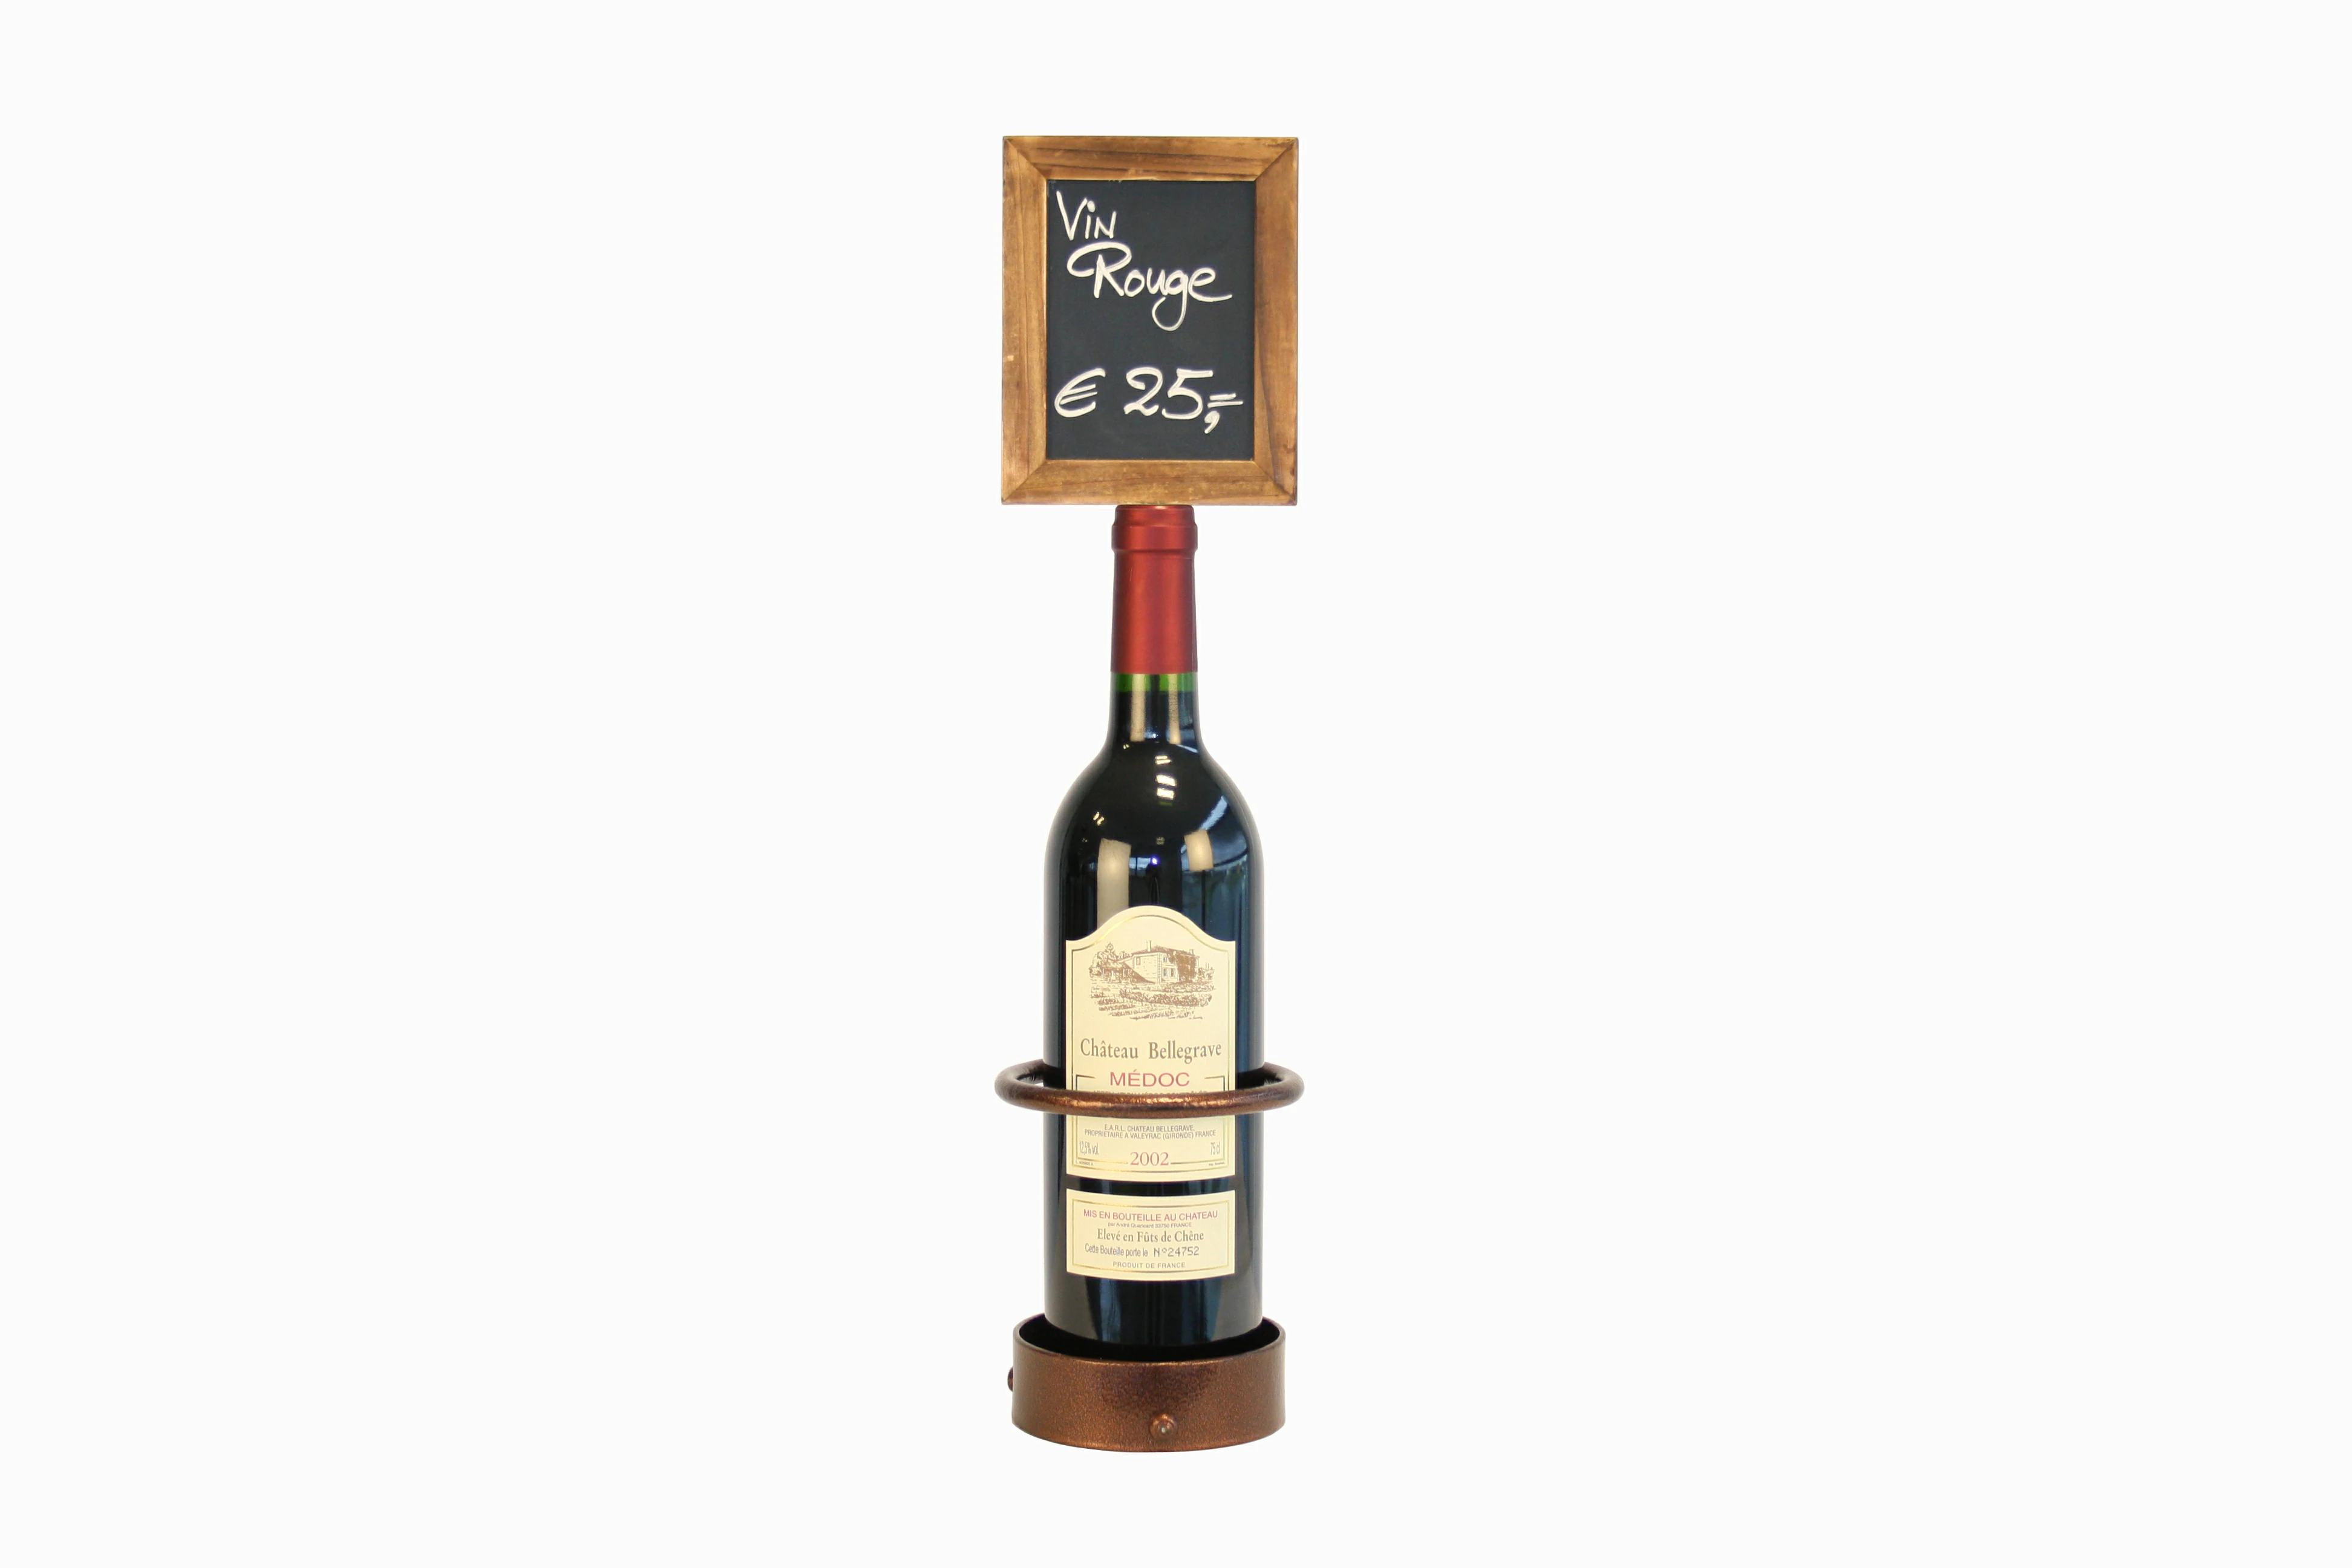 Wine Bottle x1 Chalk Board Display 45 x 10.5cm